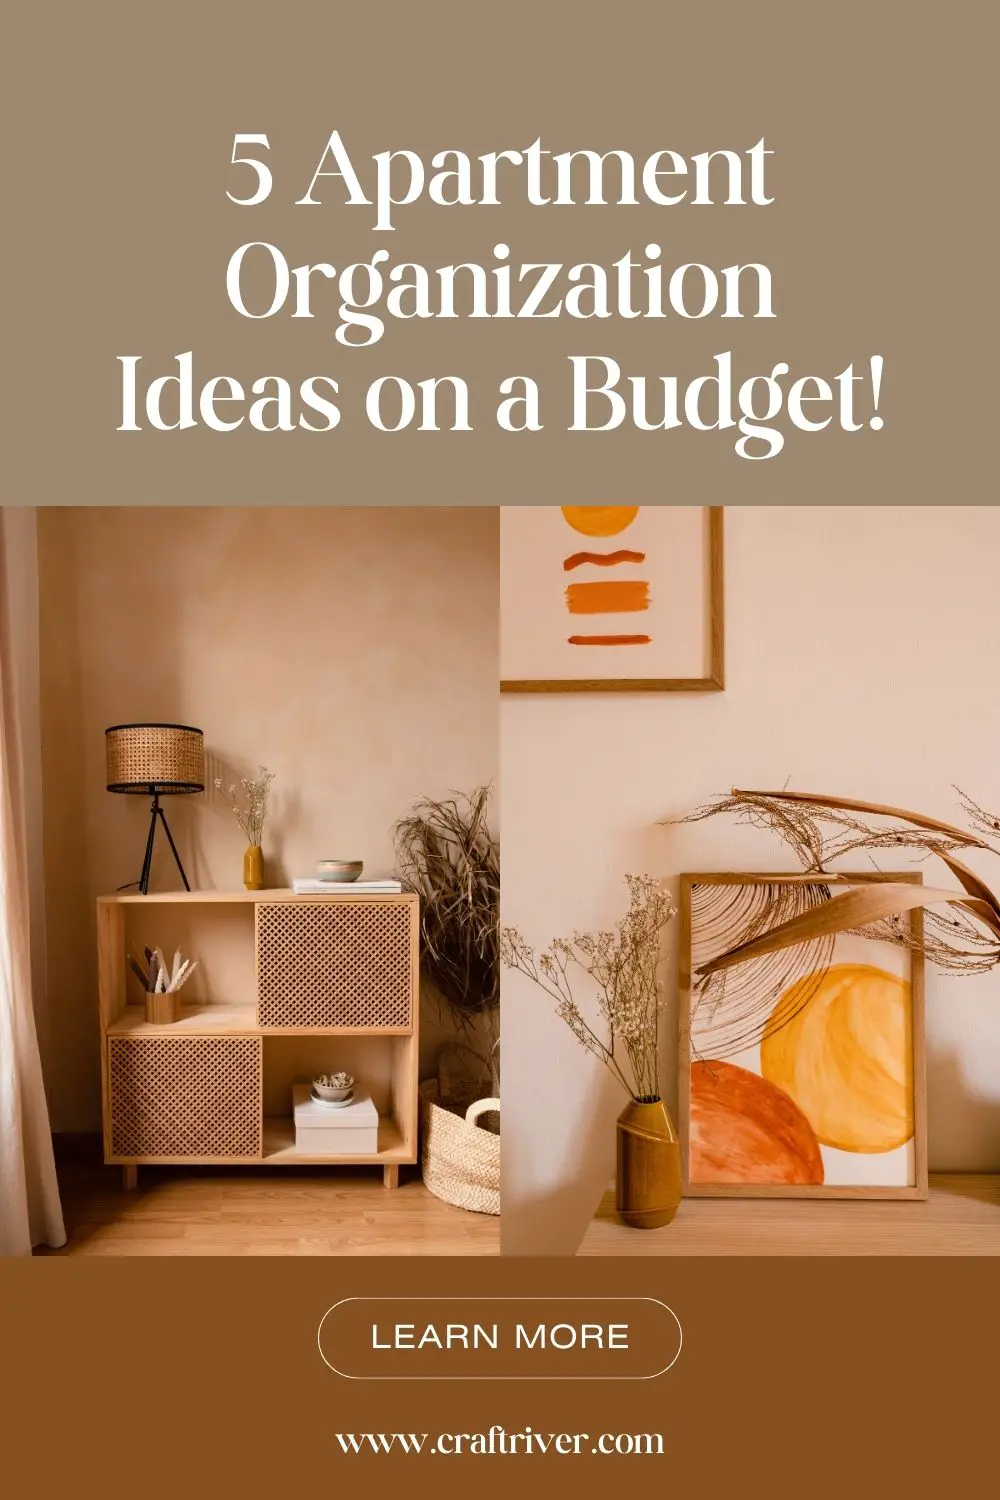 Apartment Organization Ideas on a Budget